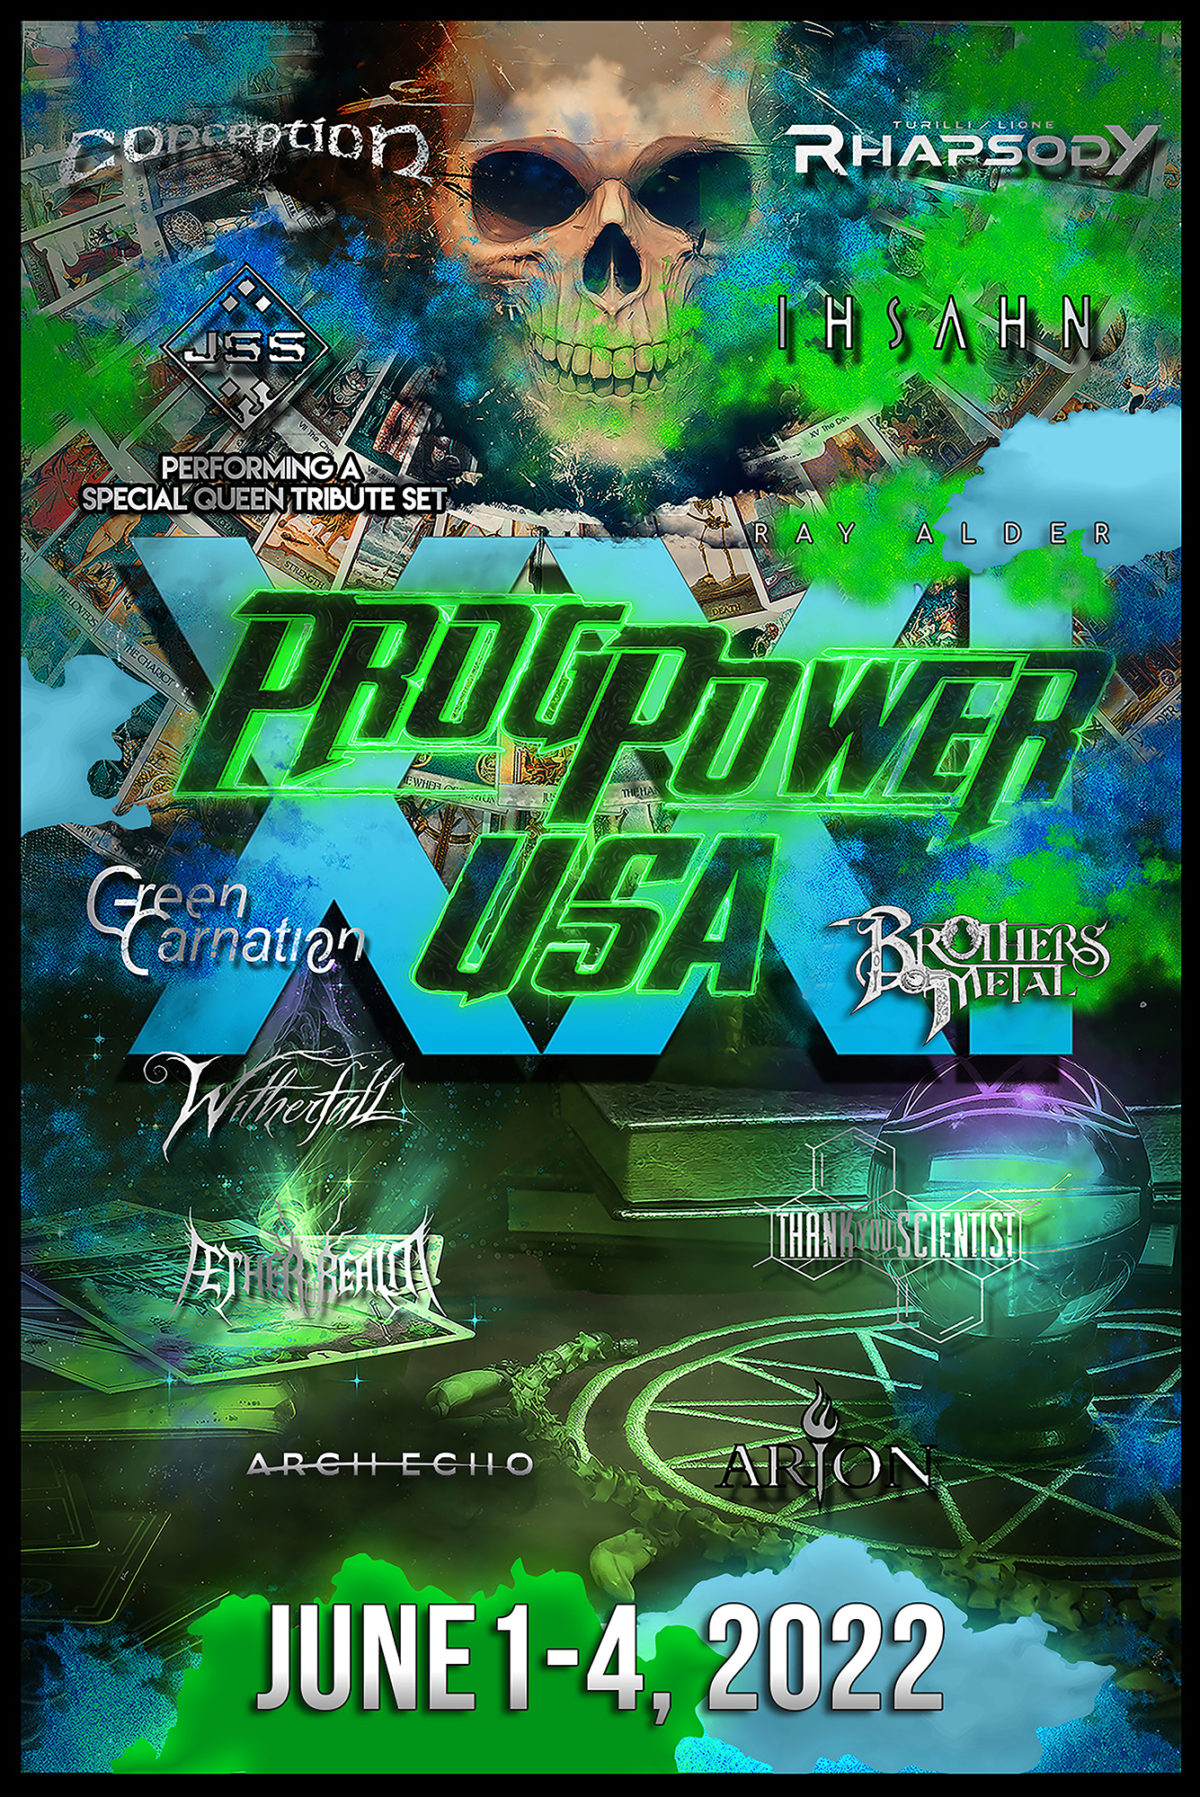 ProgPower USA Event Information ProgPower USA